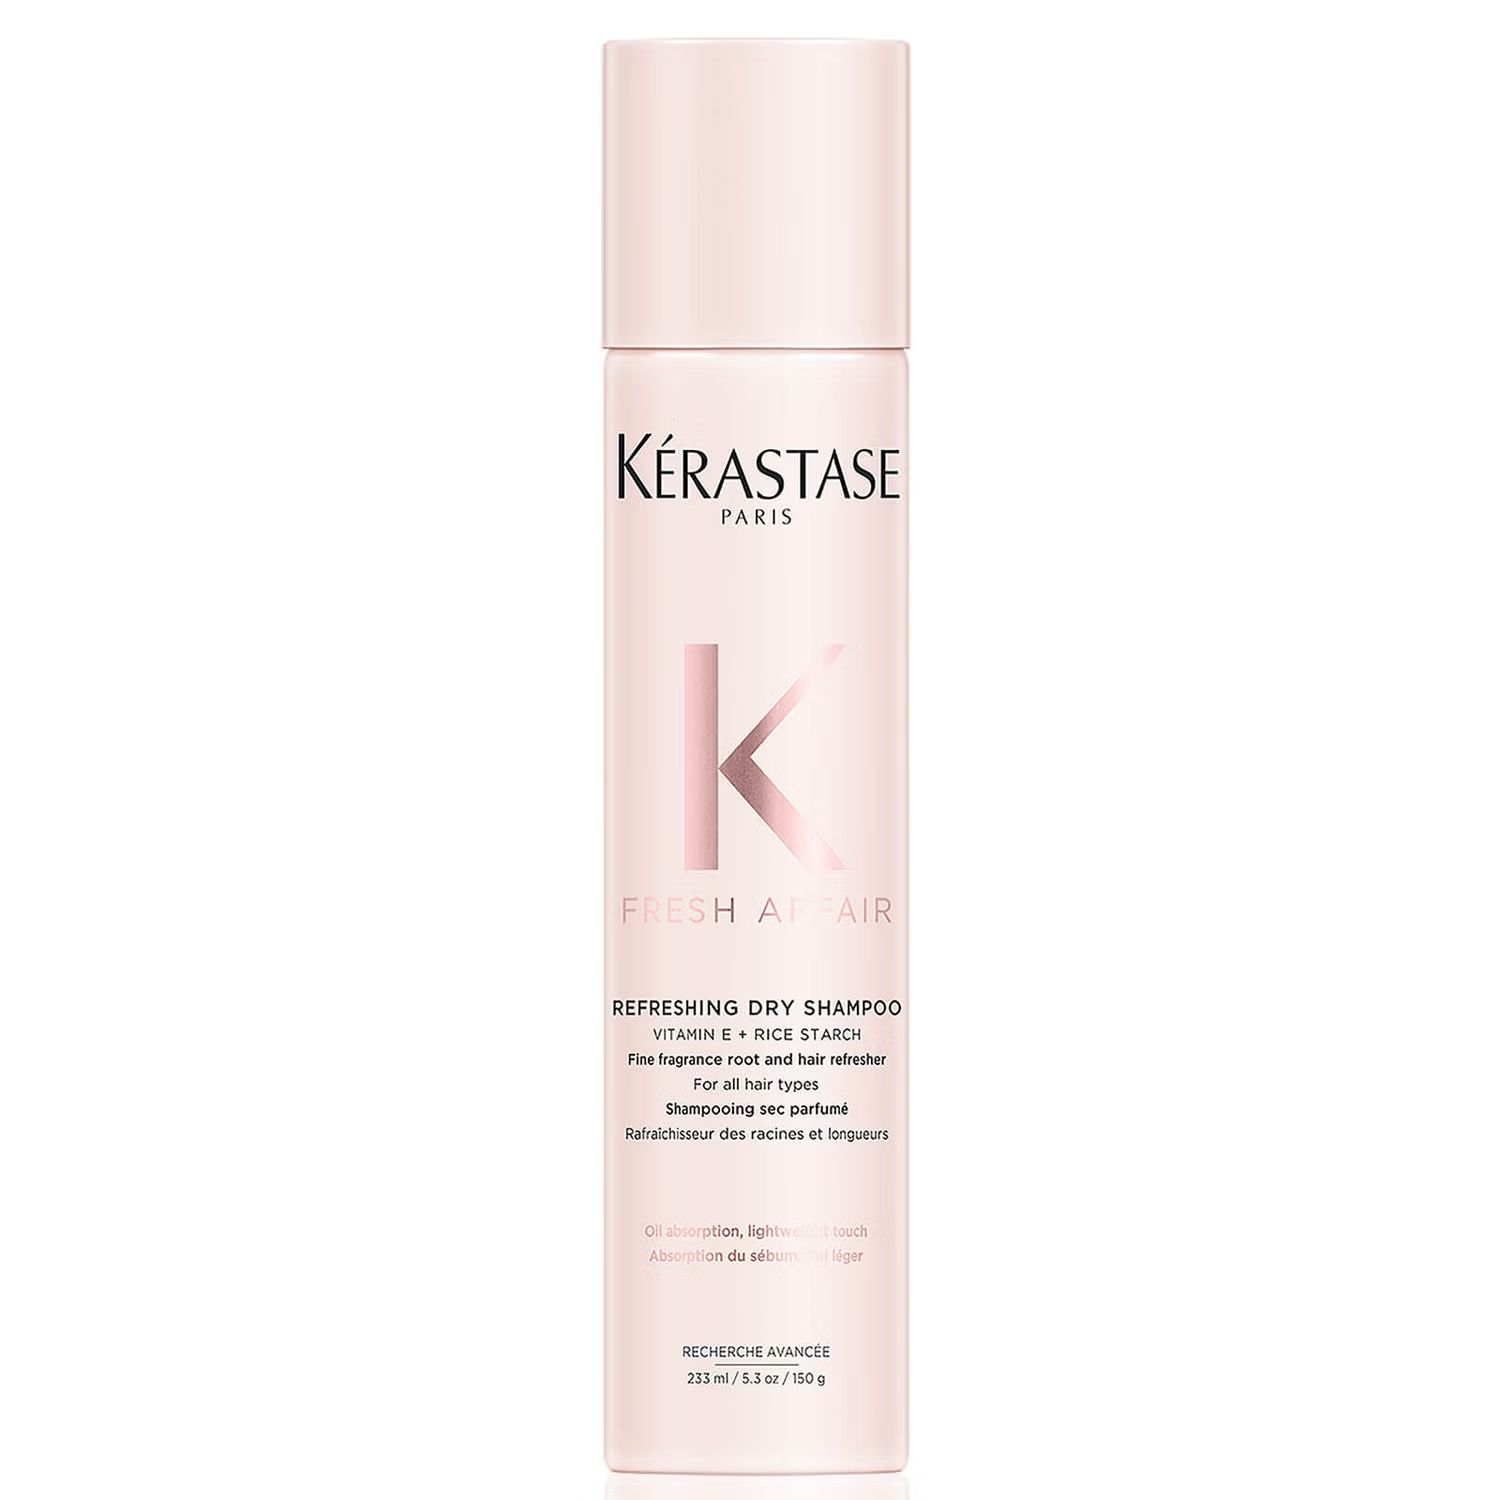 Kérastase Fresh Affair Dry Shampoo 150g | Look Fantastic (UK)